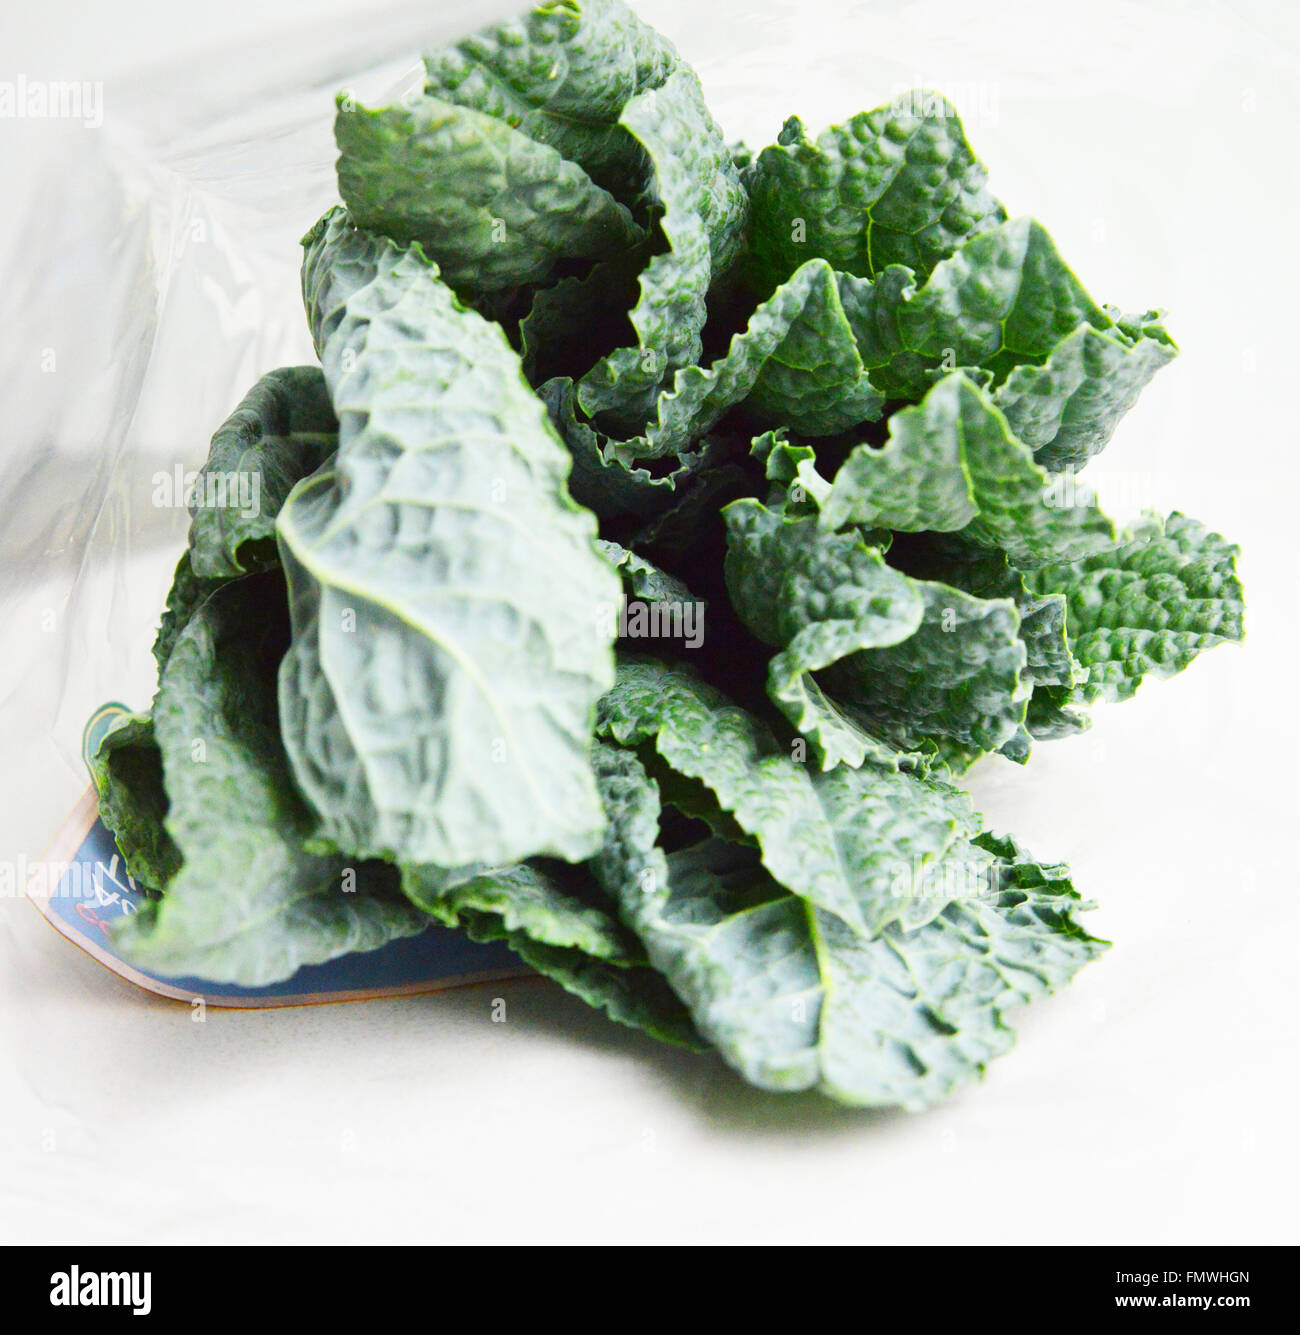 Kale. Green Kale. Stock Photo